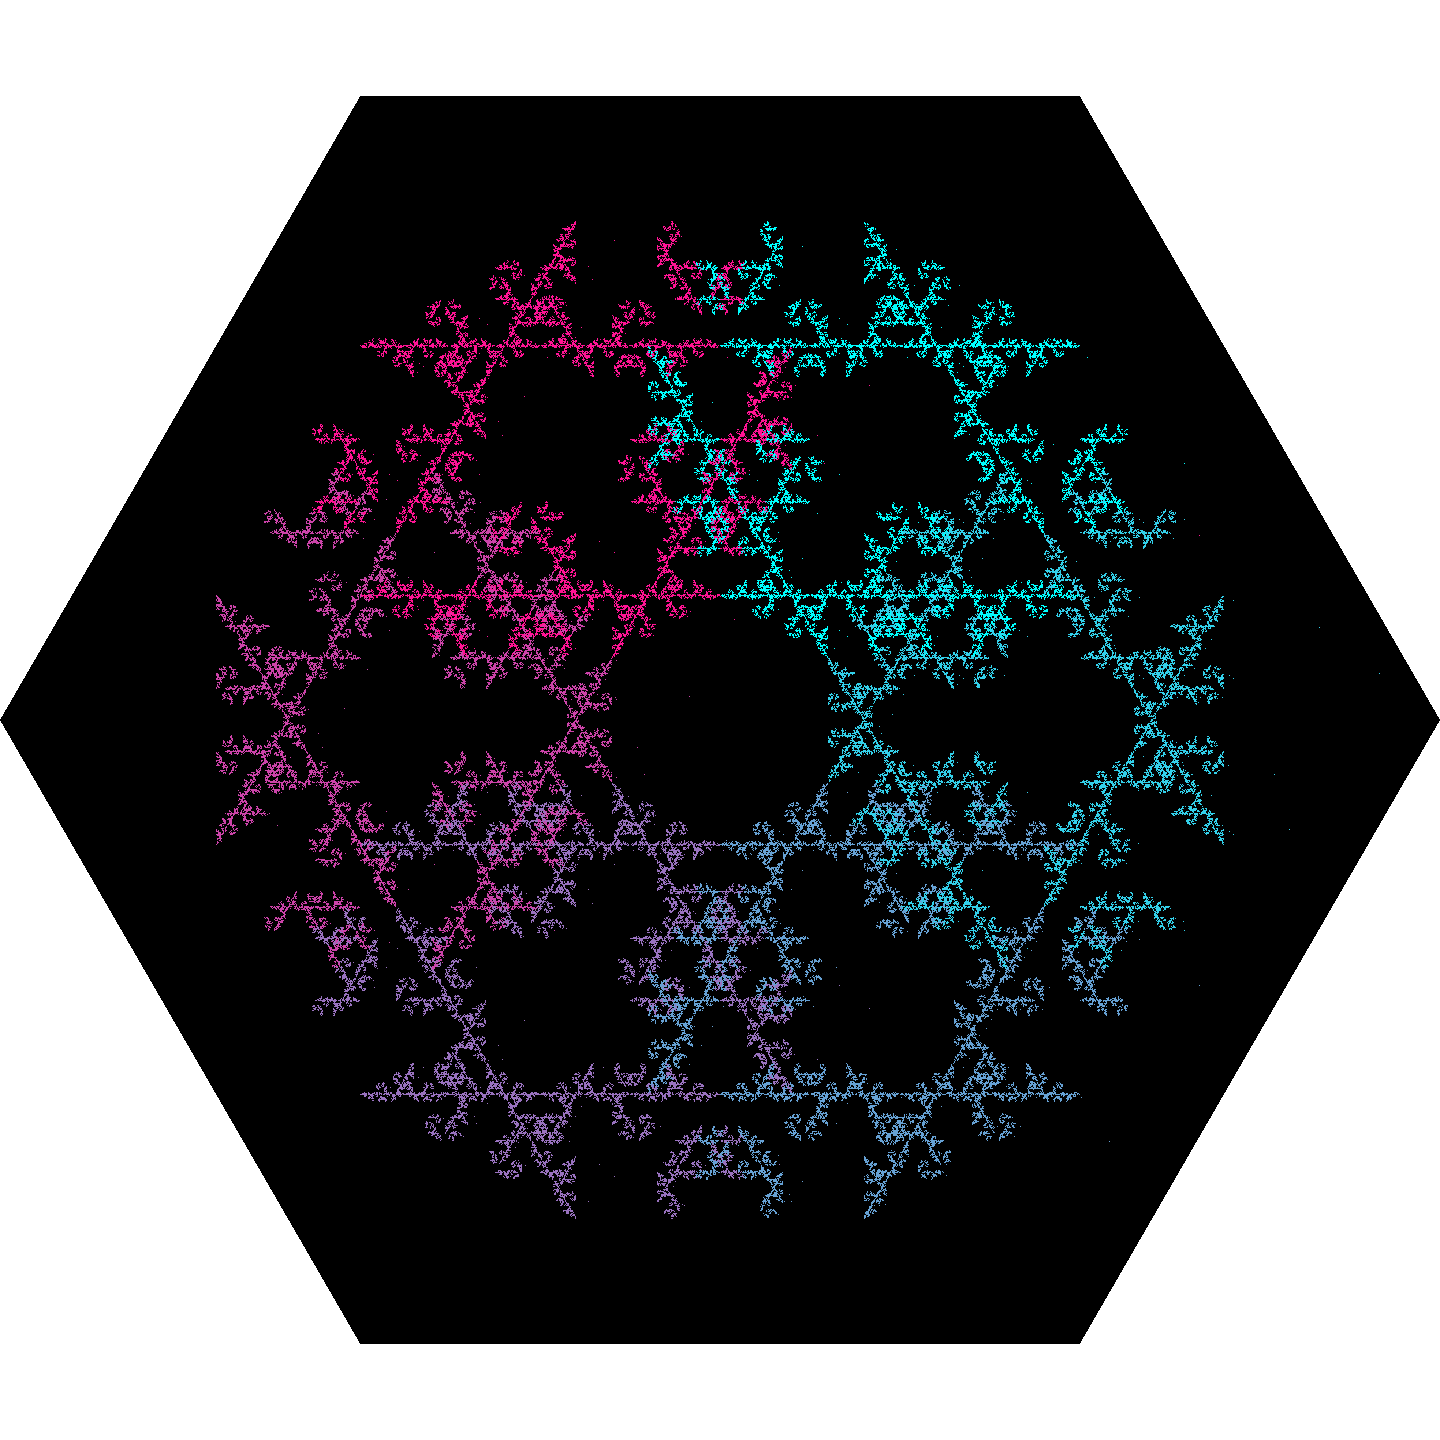 hexagon_trial2_0.5.png